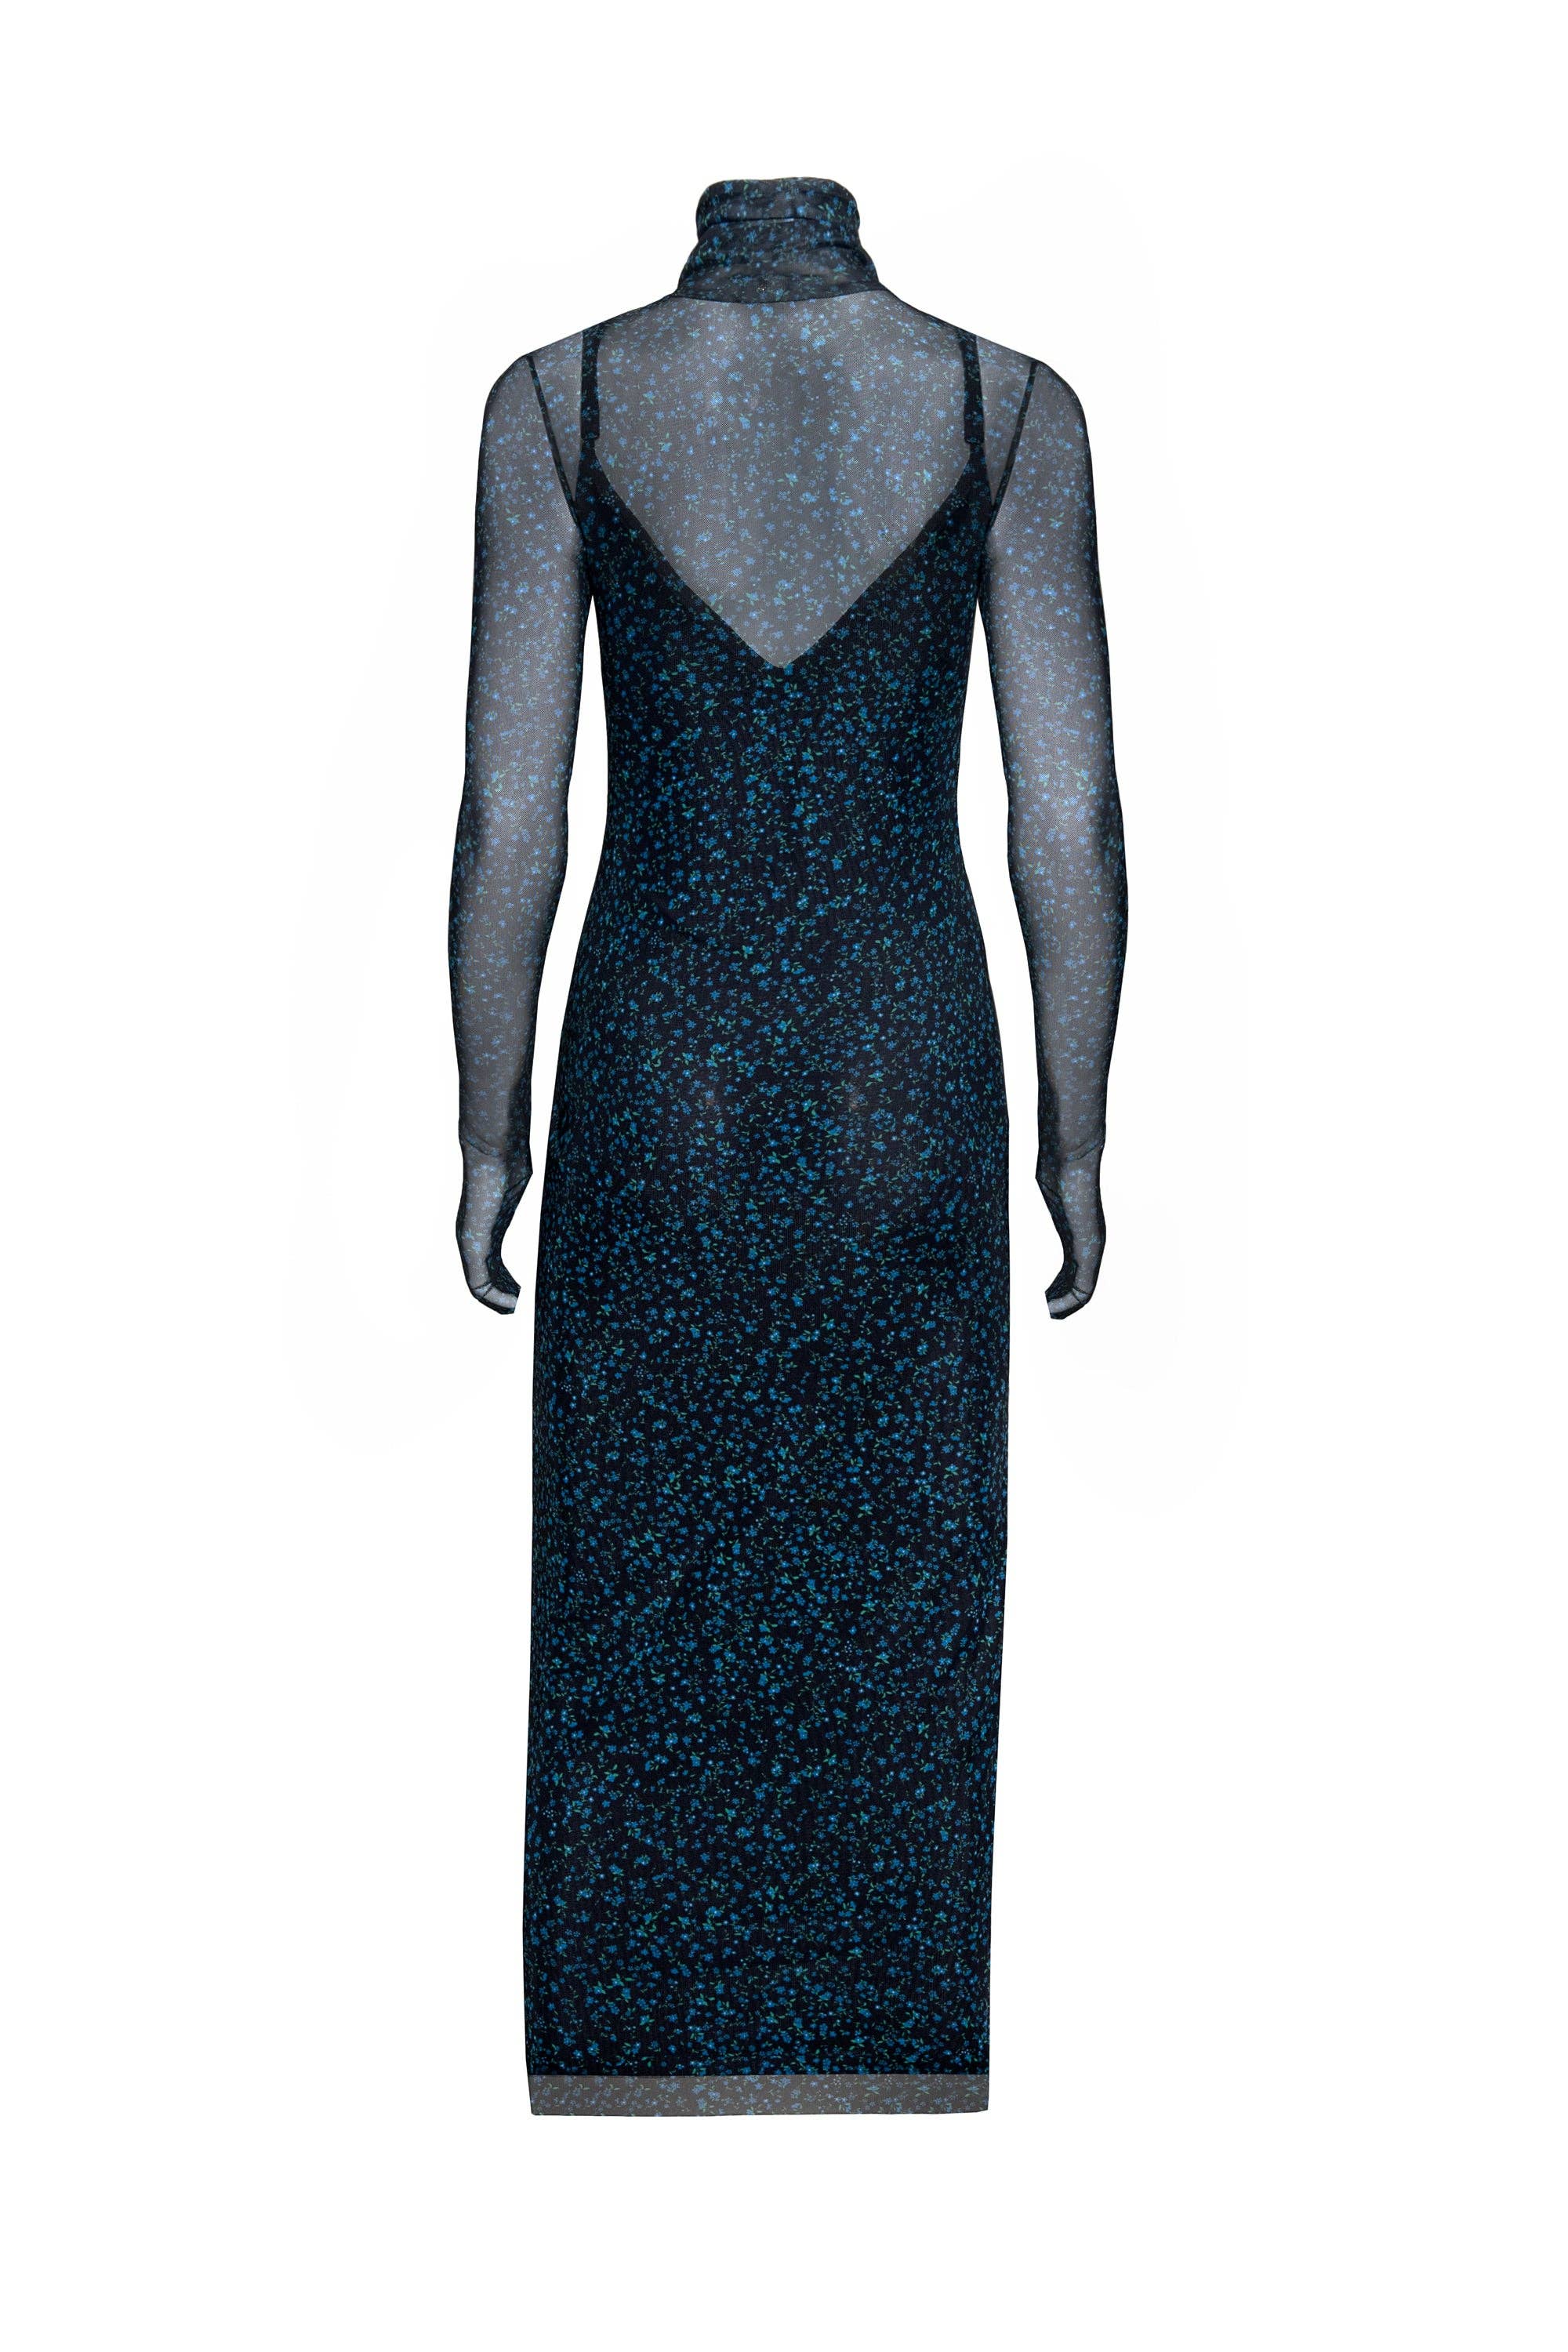 AFRM - Shailene Mesh Dress - Blue Daisy Ditsy